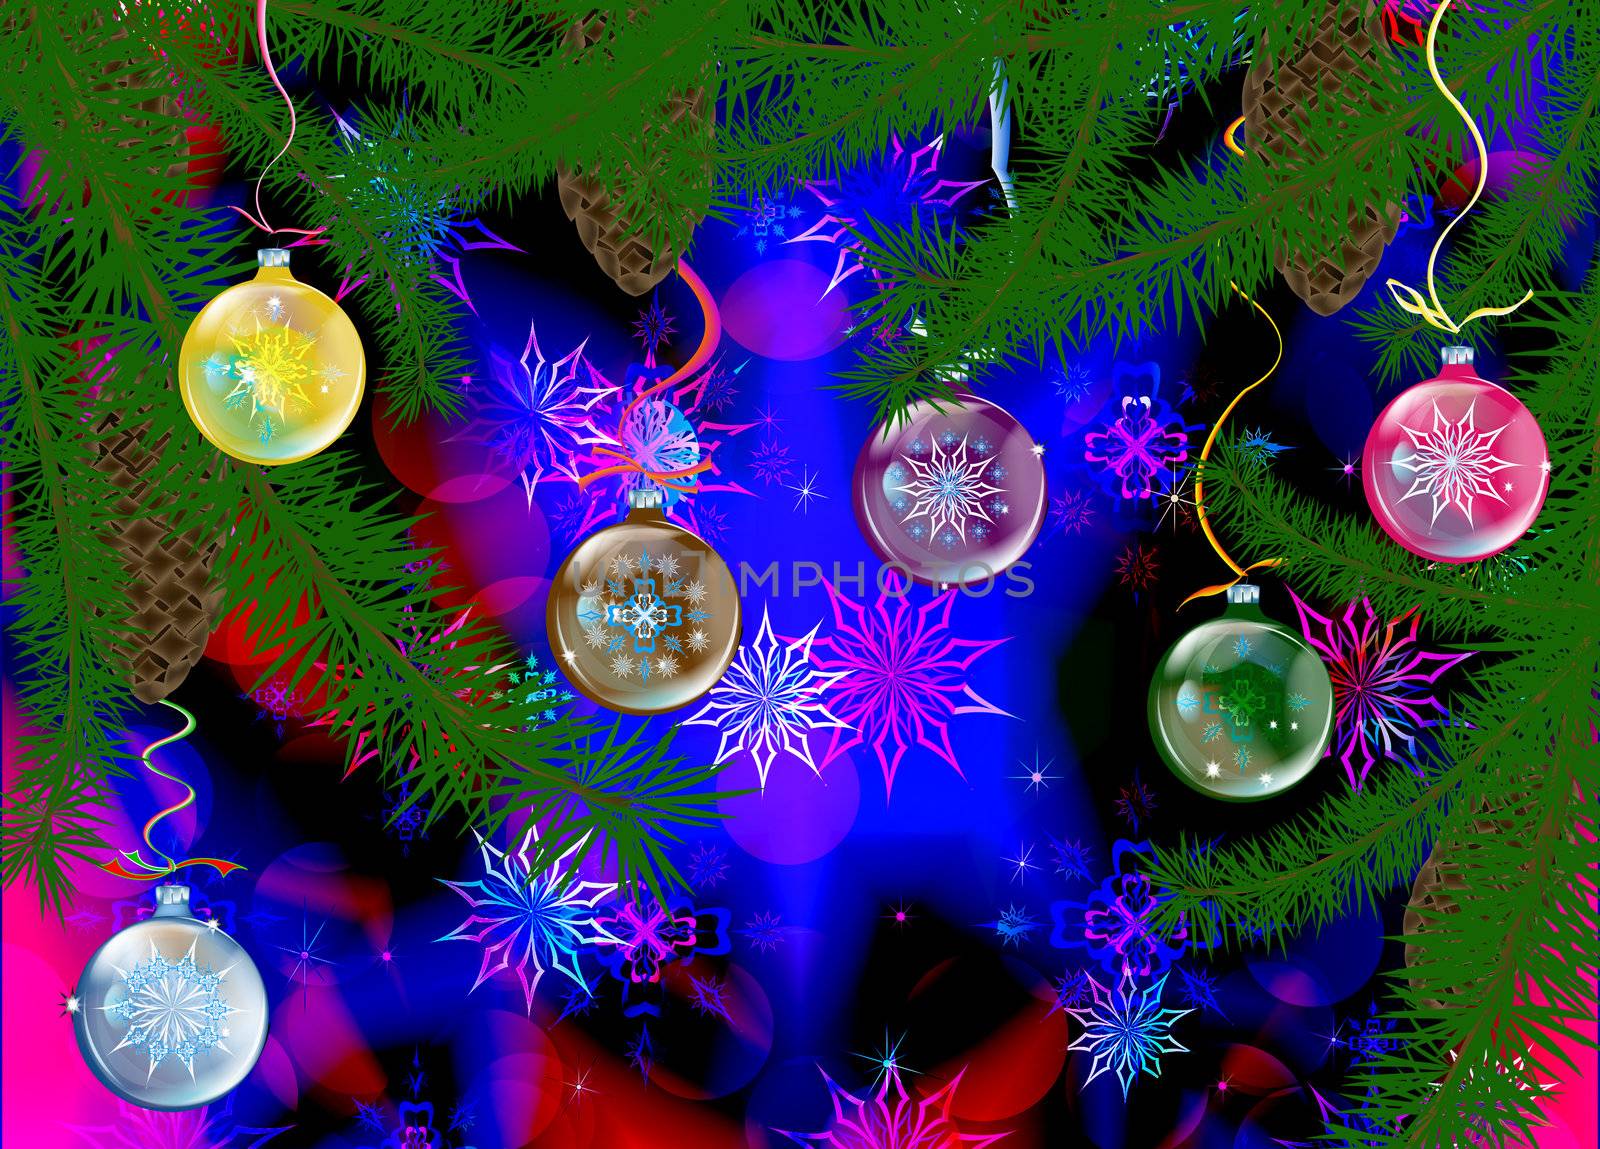 Abstract celebratory winter illustration on a dark background